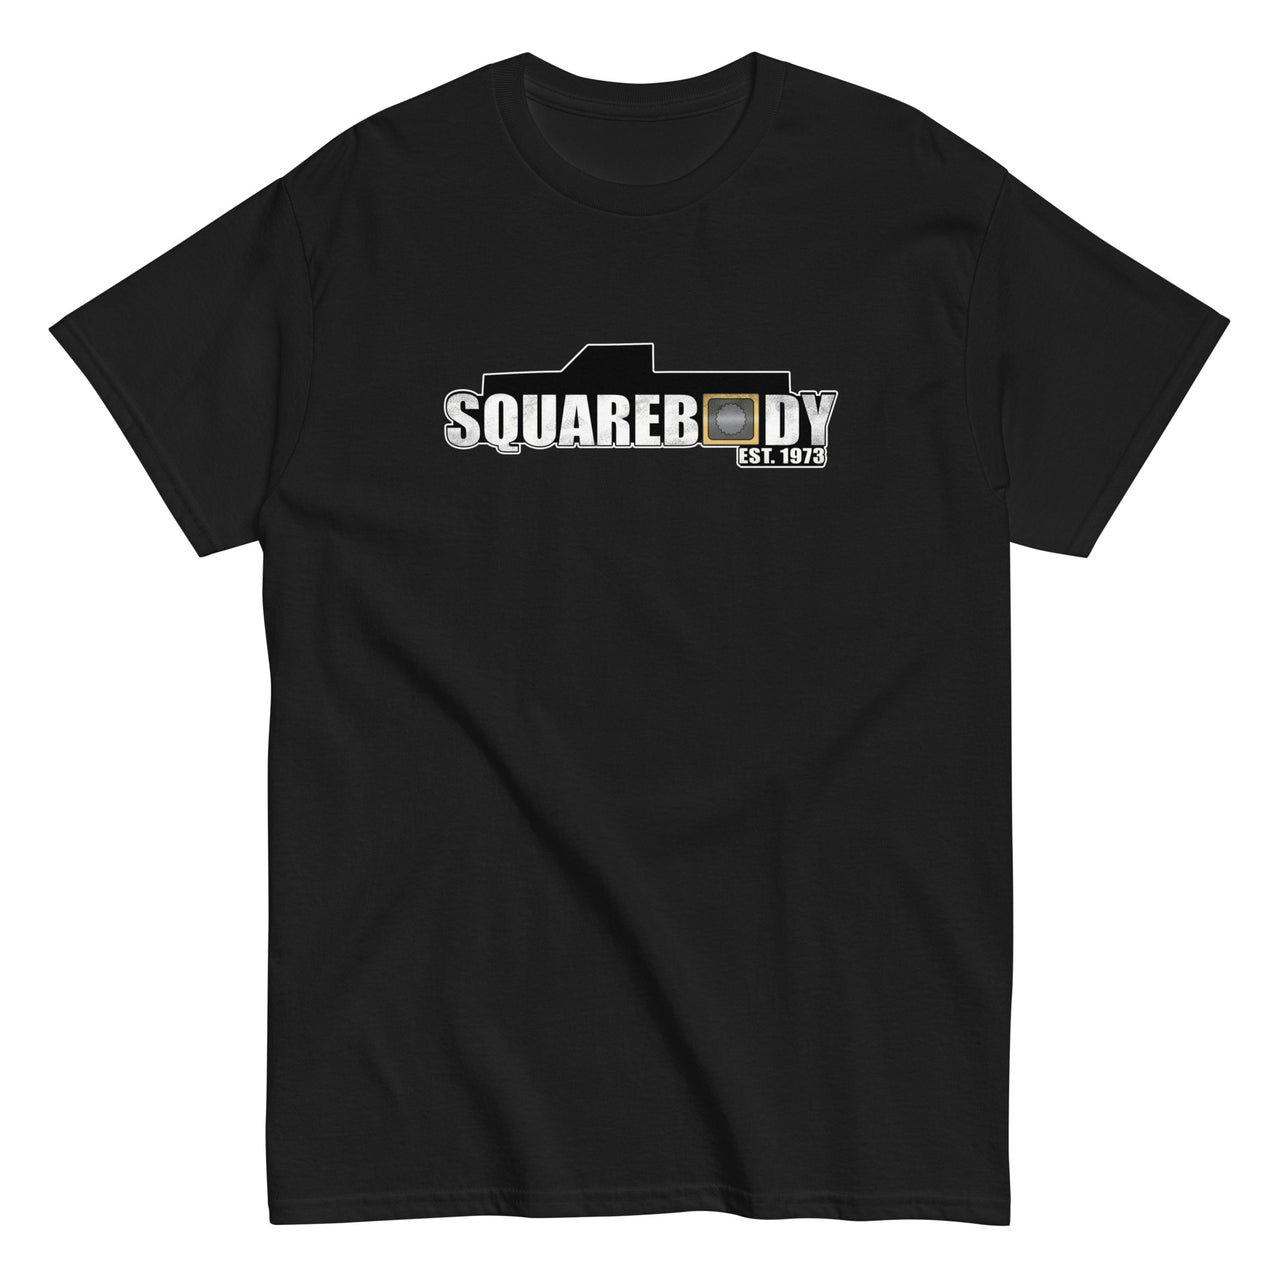 Square Body Est 1973 T-Shirt in black